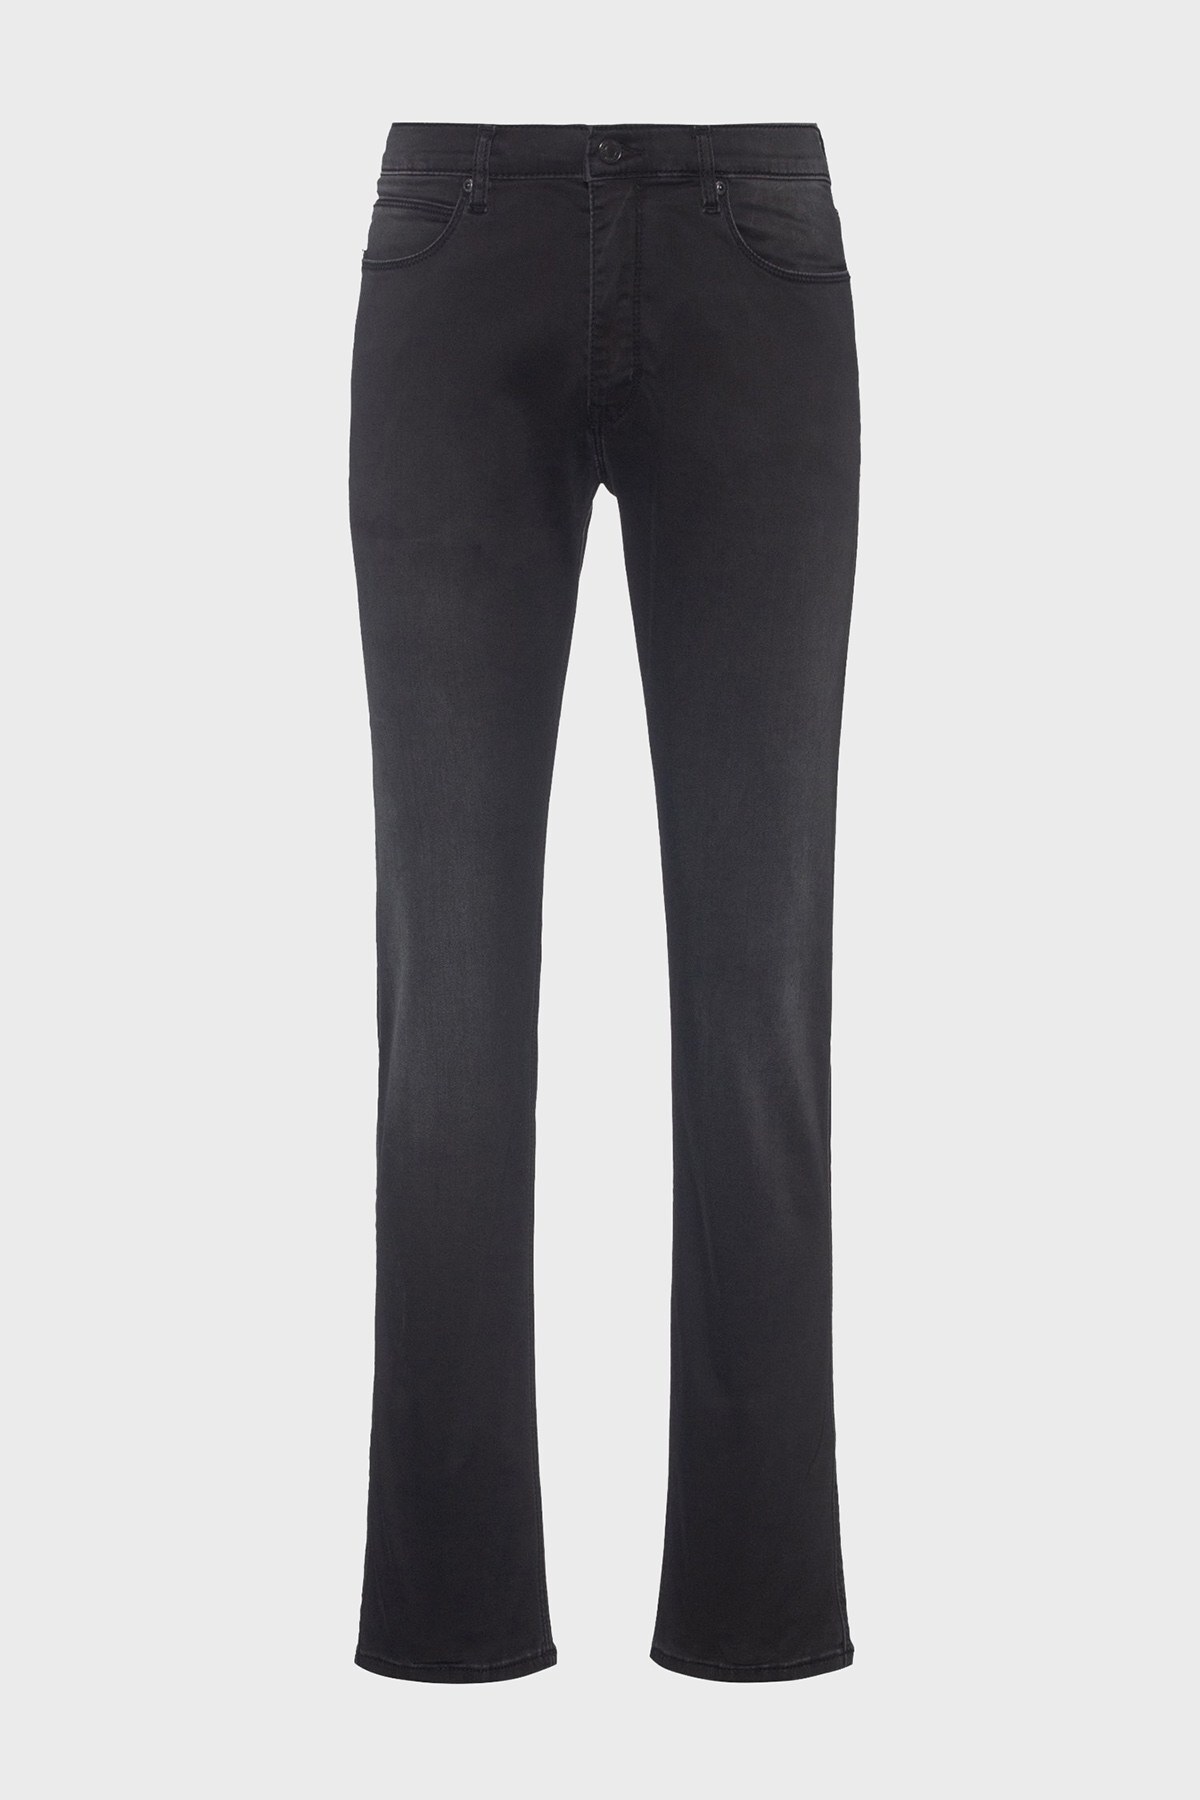 Hugo Boss Pamuklu Slim Fit Jeans Erkek Kot Pantolon 50459811 021 ANTRASİT